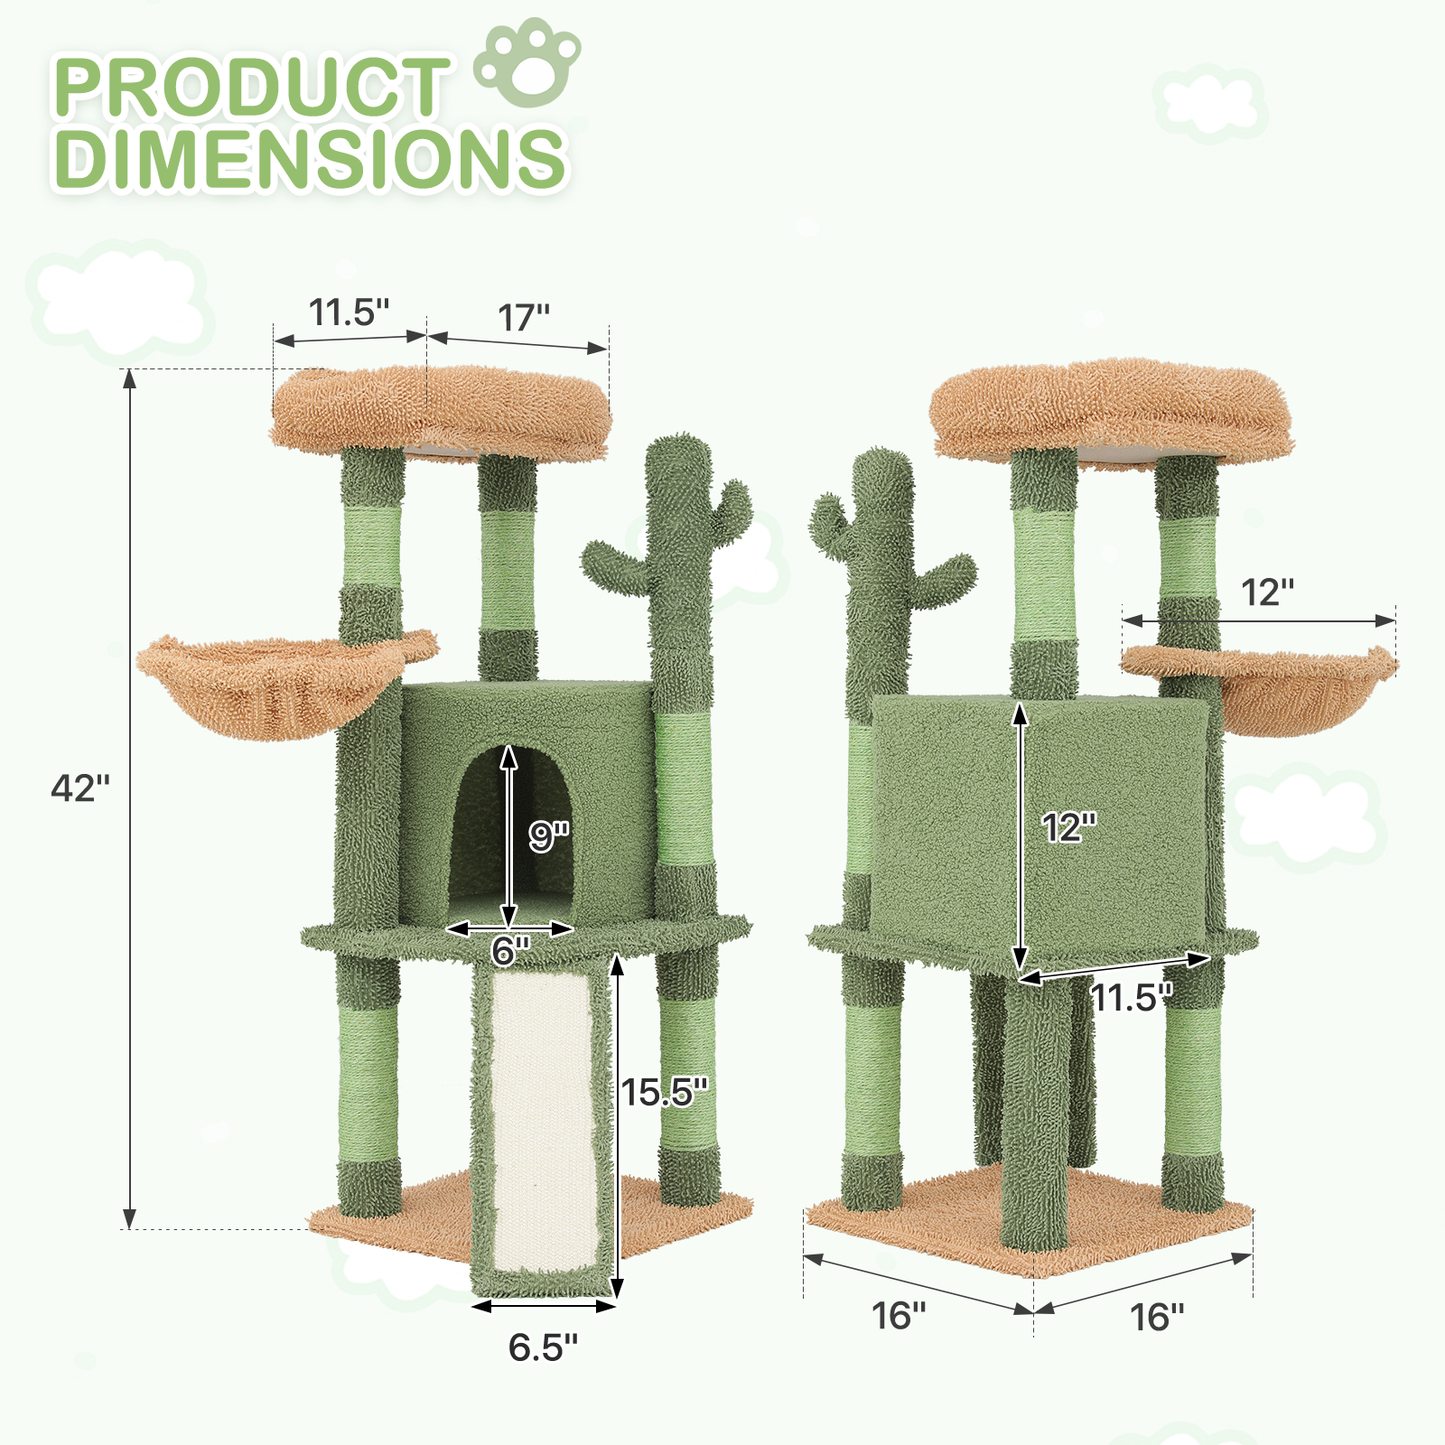 42" Height Cat Tree - Cactus Design - Green/Light Brown